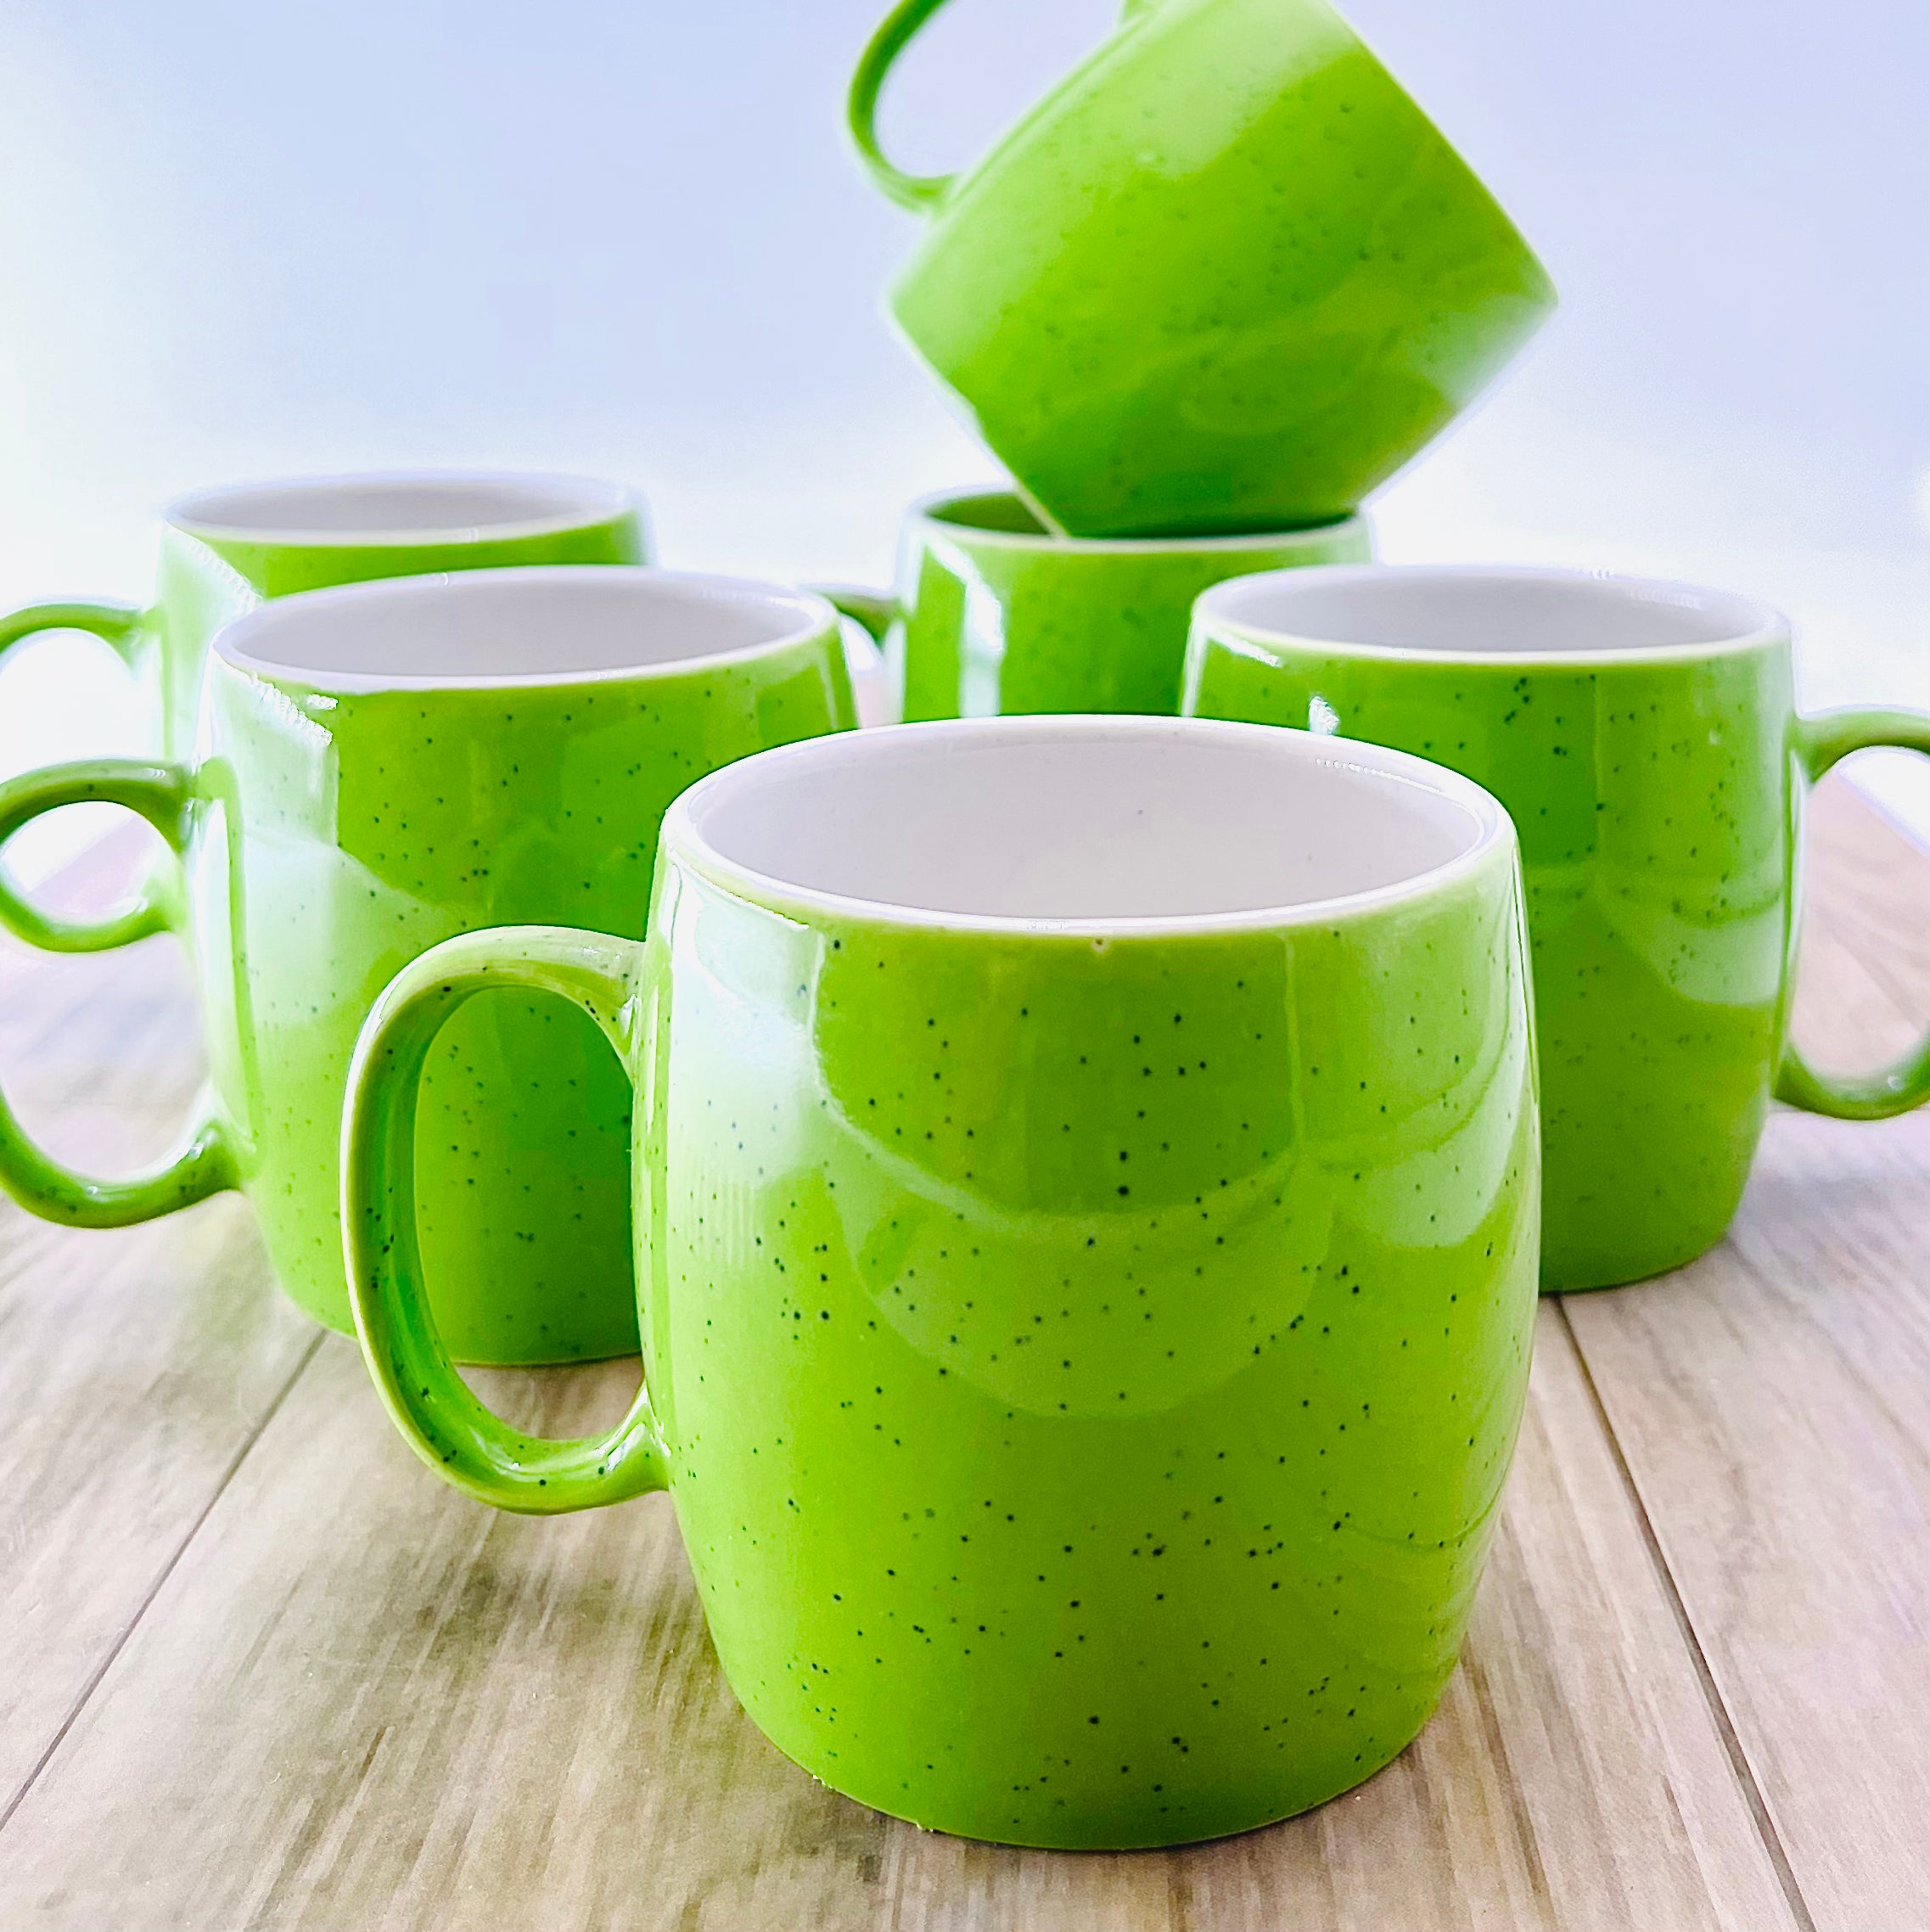 Green Love Ceramic Tea & Coffee Cups - (Pack of 6) 150ml